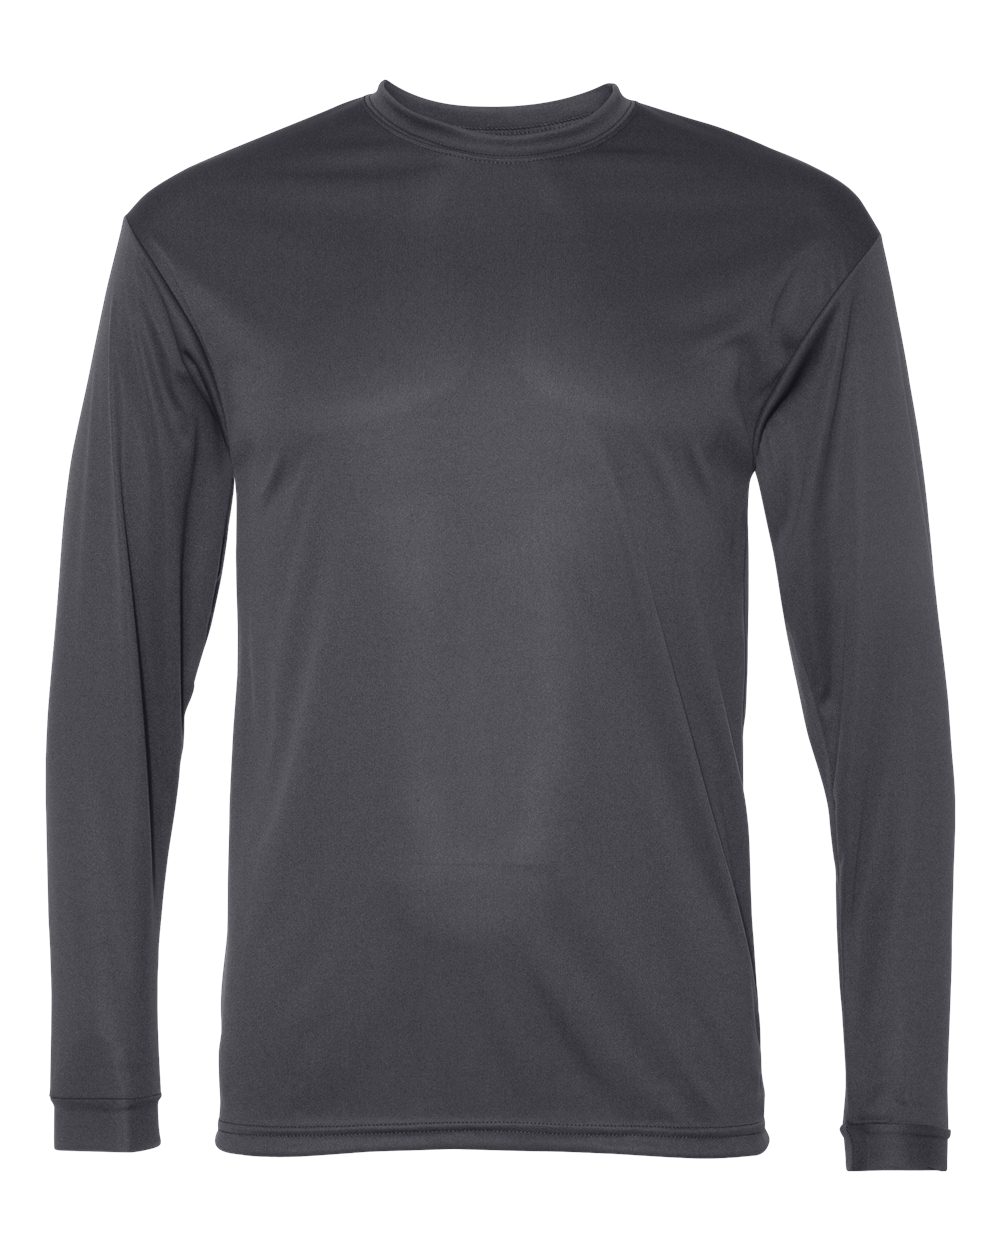 C2 Sport 5104 - Long Sleeve Performance T-Shirt $8.29 - T-Shirts